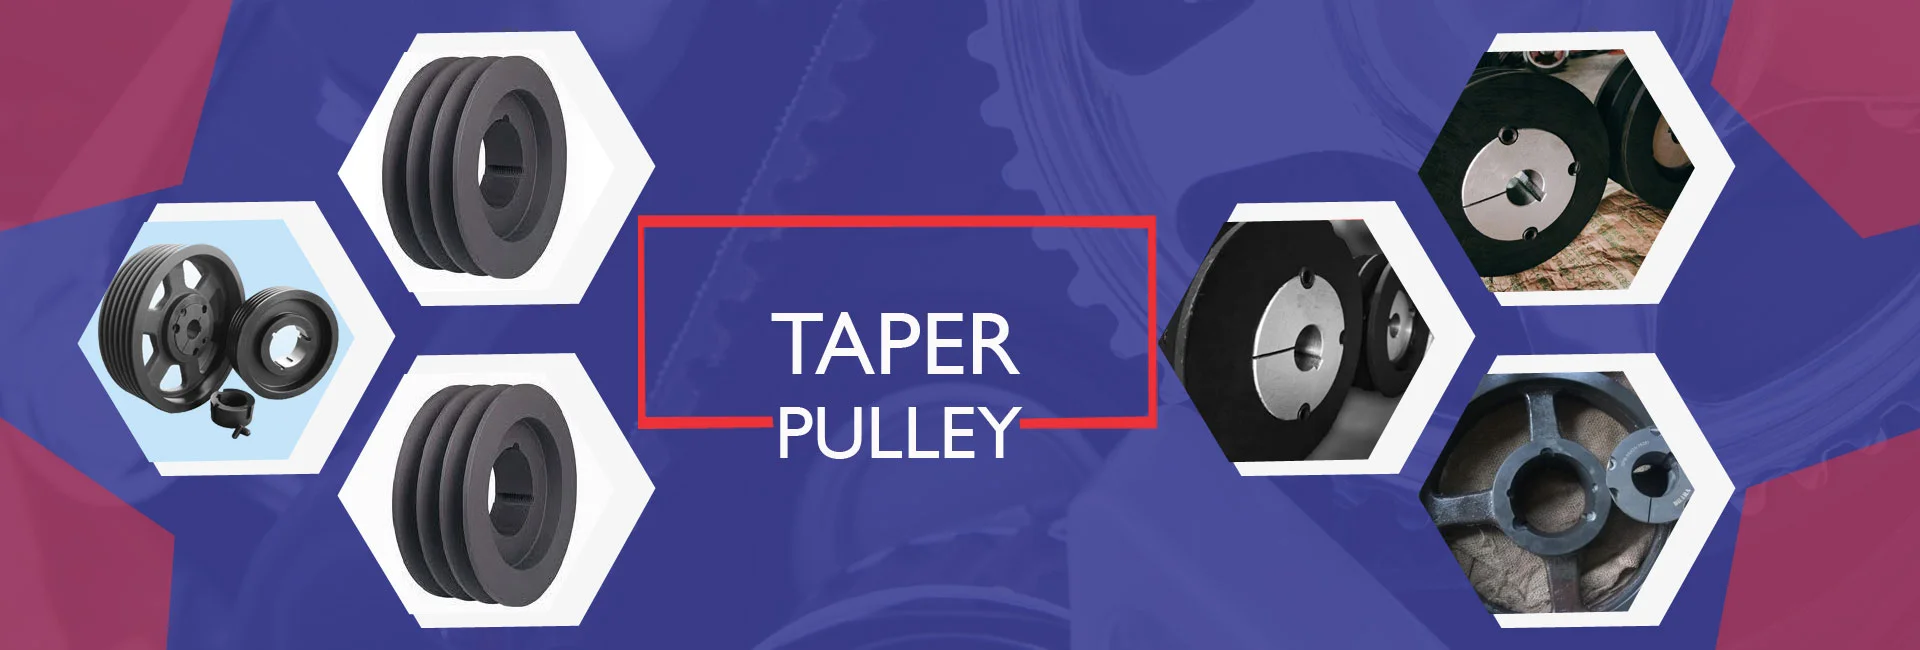 Taper Pulley Manufatcurer in Australia